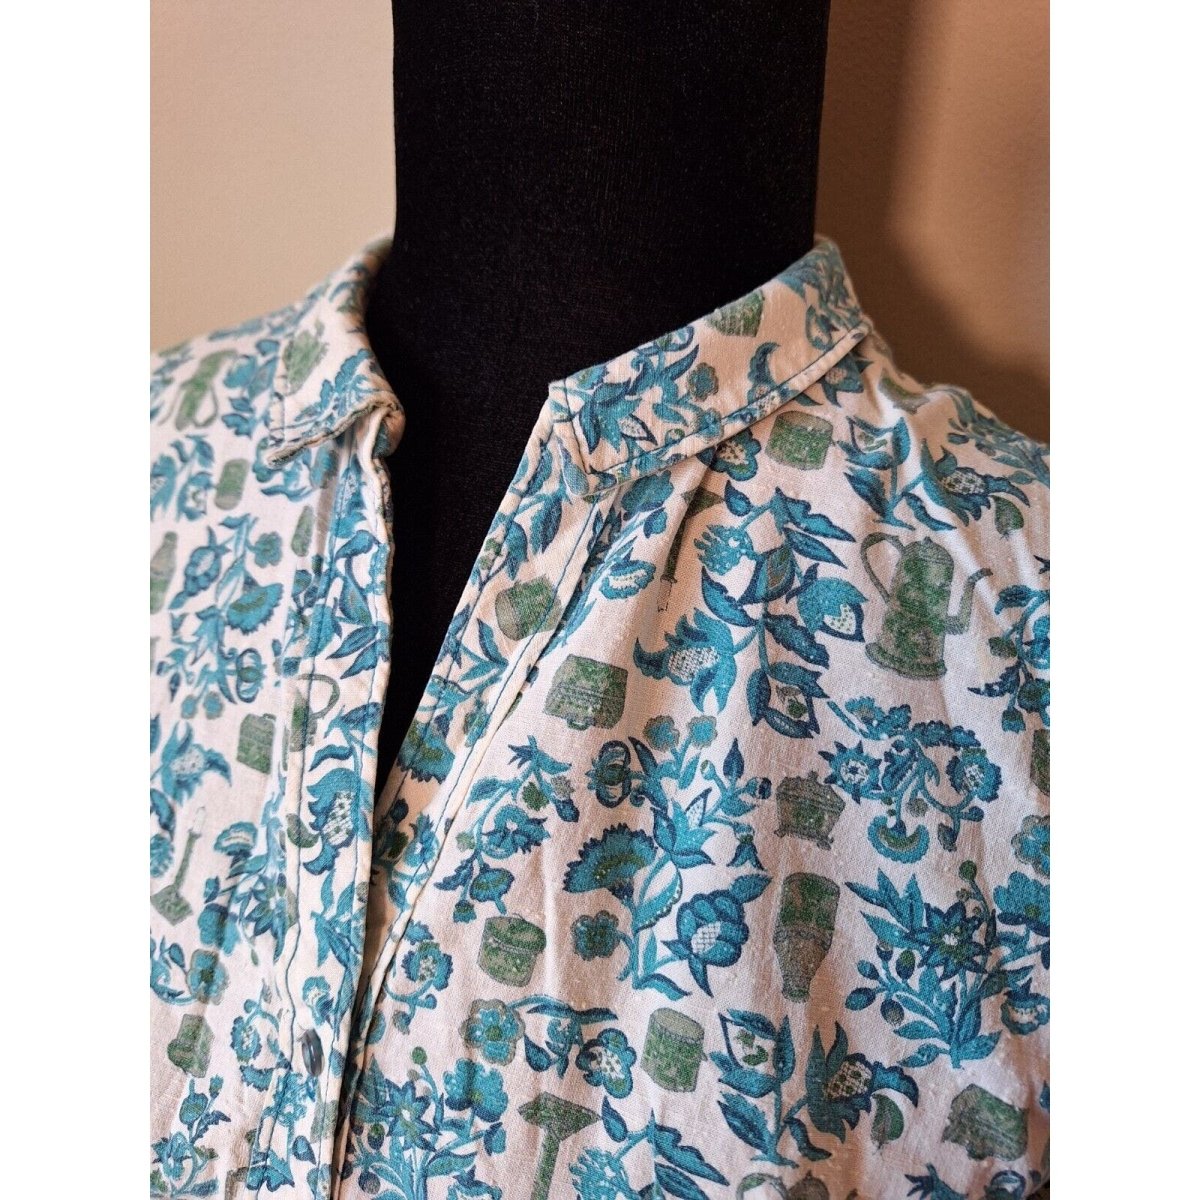 Vintage 60s Blue/Green Cotton Floral Shirtwaist Dress Women Size XS/S - themallvintage The Mall Vintage